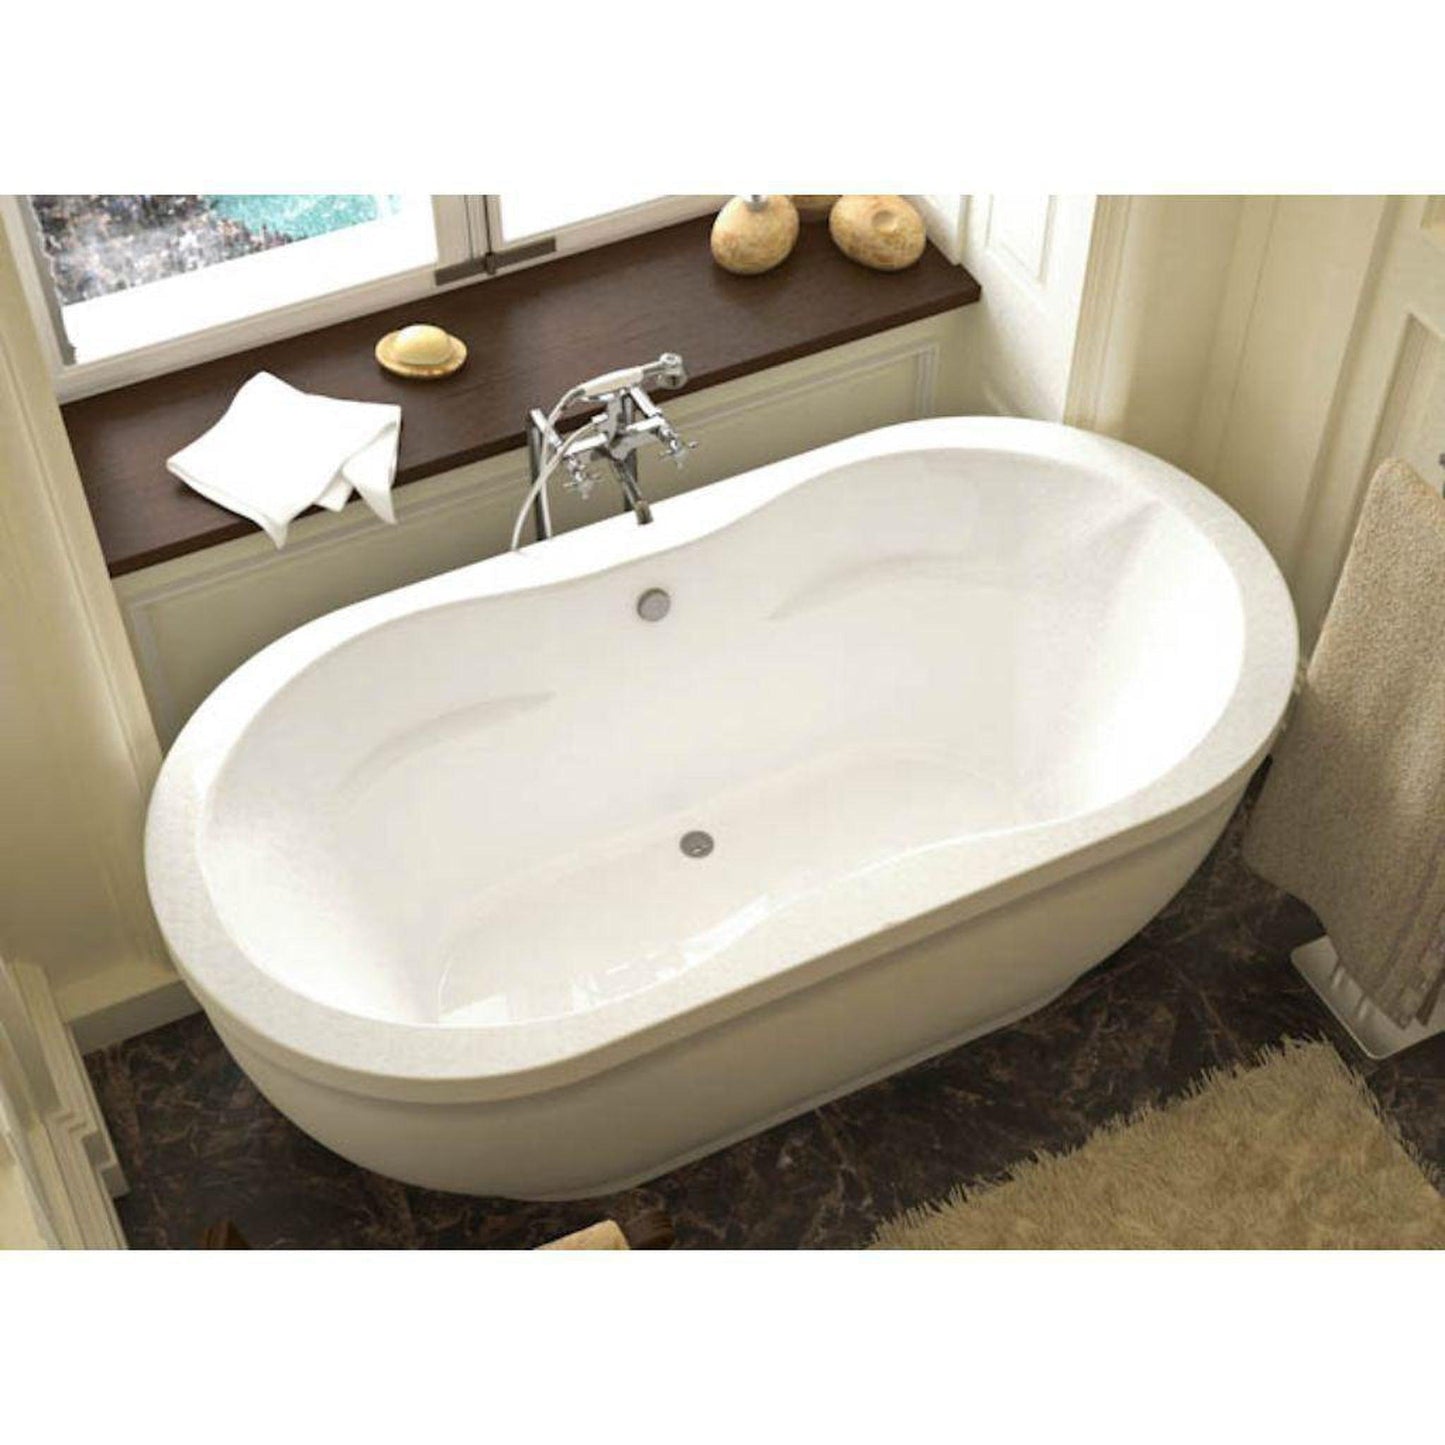 Atlantis Whirlpools Embrace 34" x 71" White Oval Freestanding Acrylic Whirlpool & Air Bath Tub